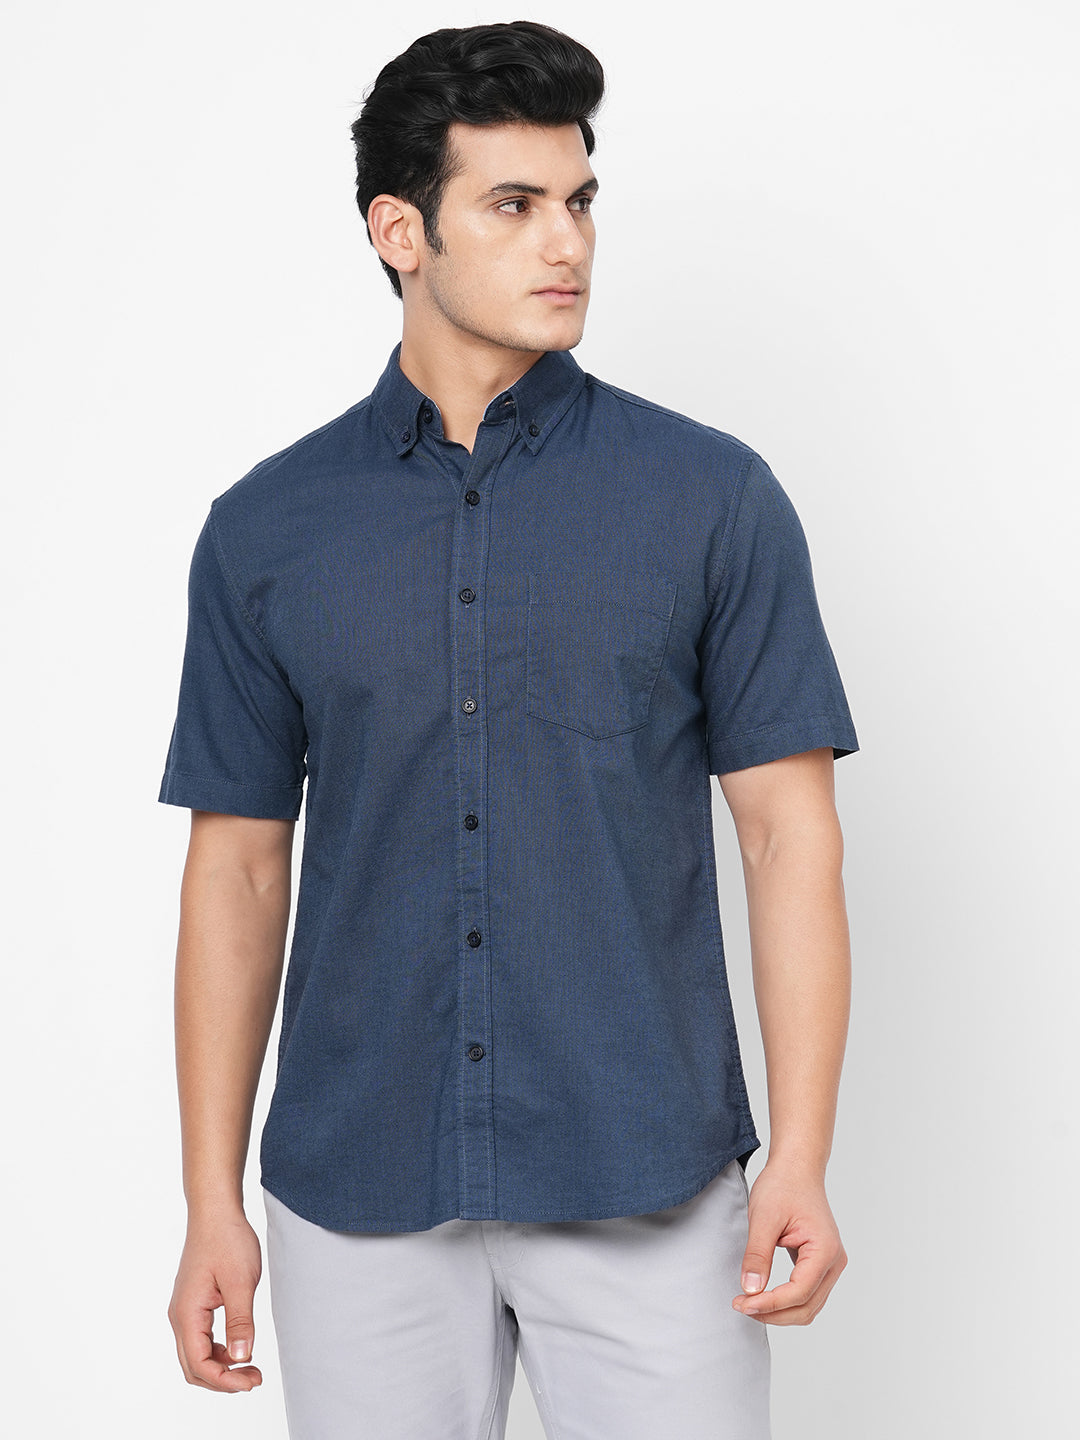 Men's Oxford Cotton Button down Collar Short Sleeved Shirt - Navy